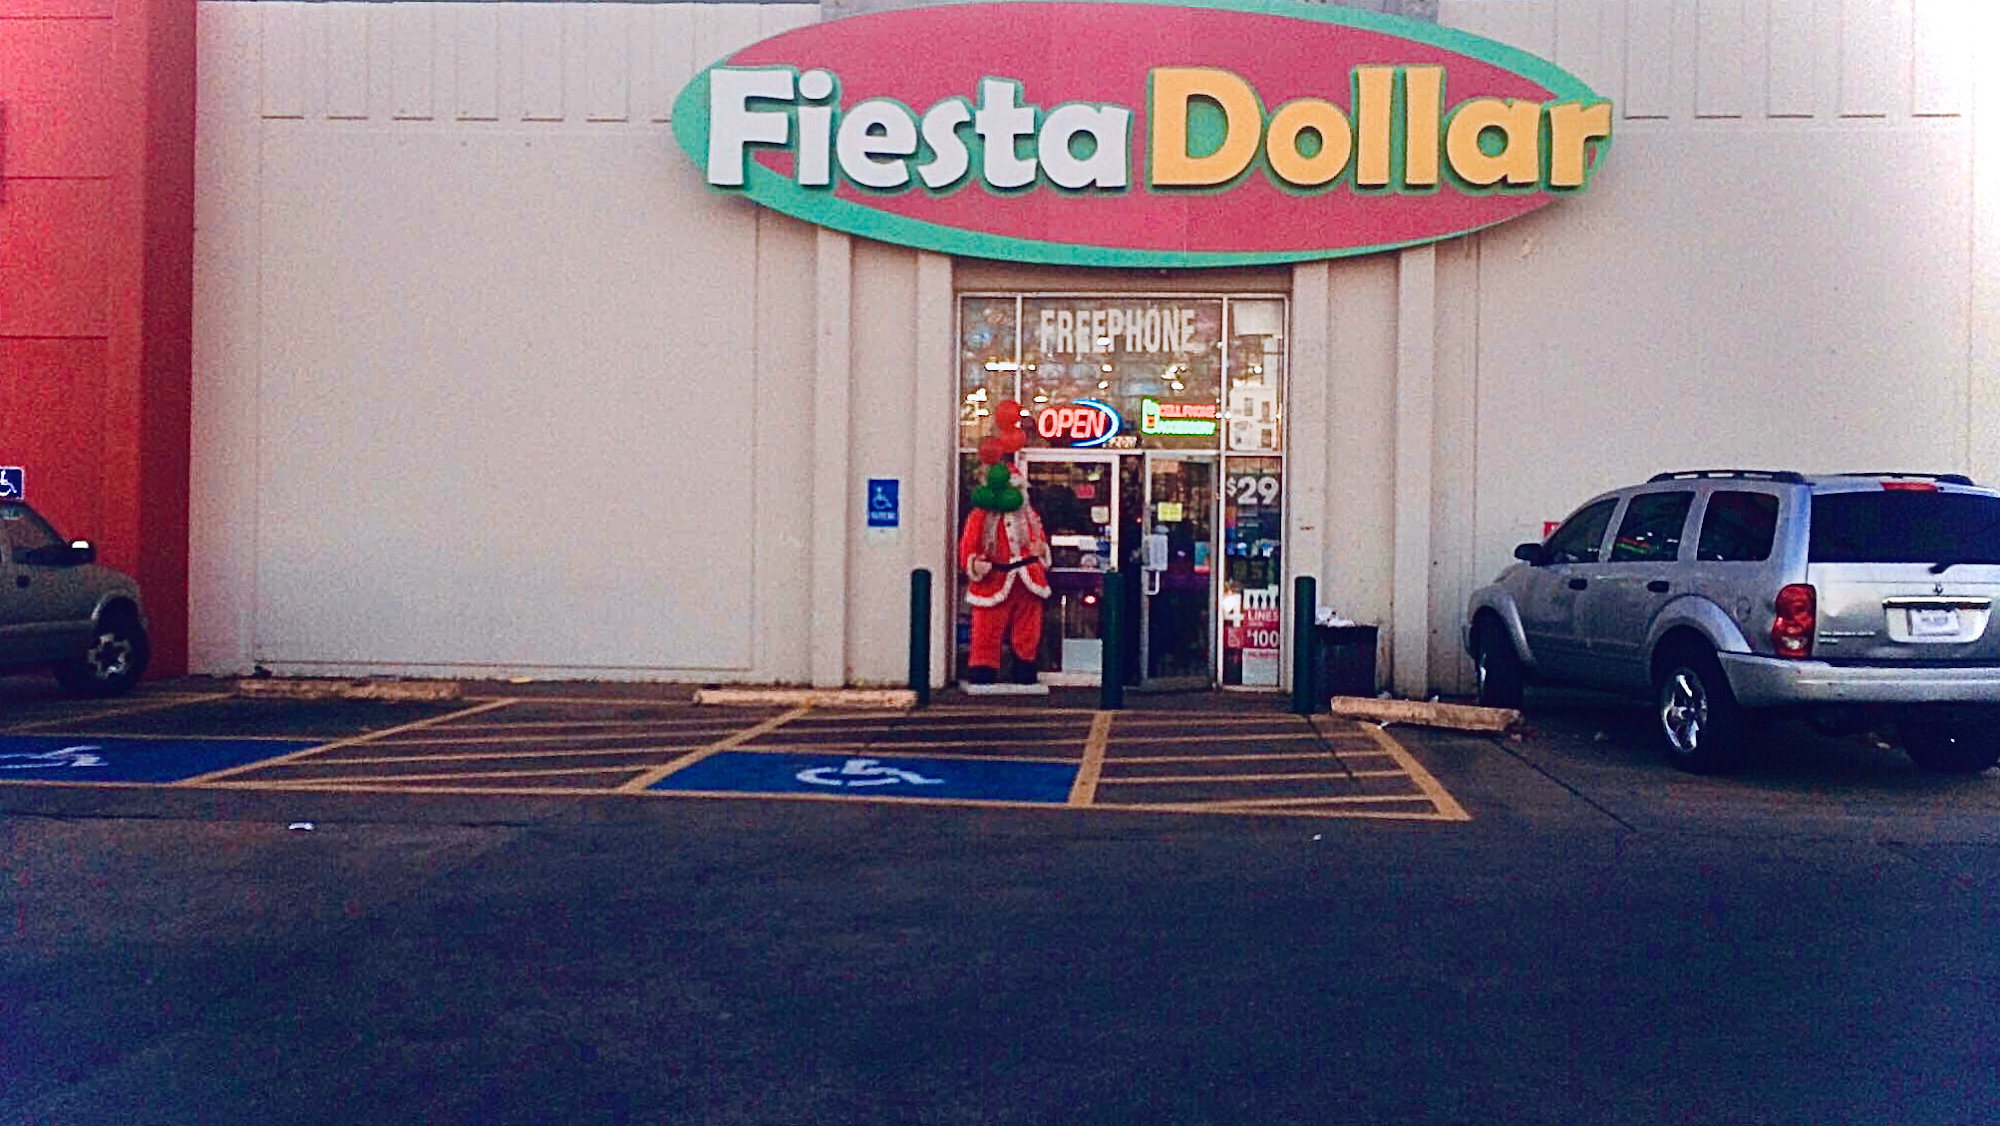 Fiesta Dollar